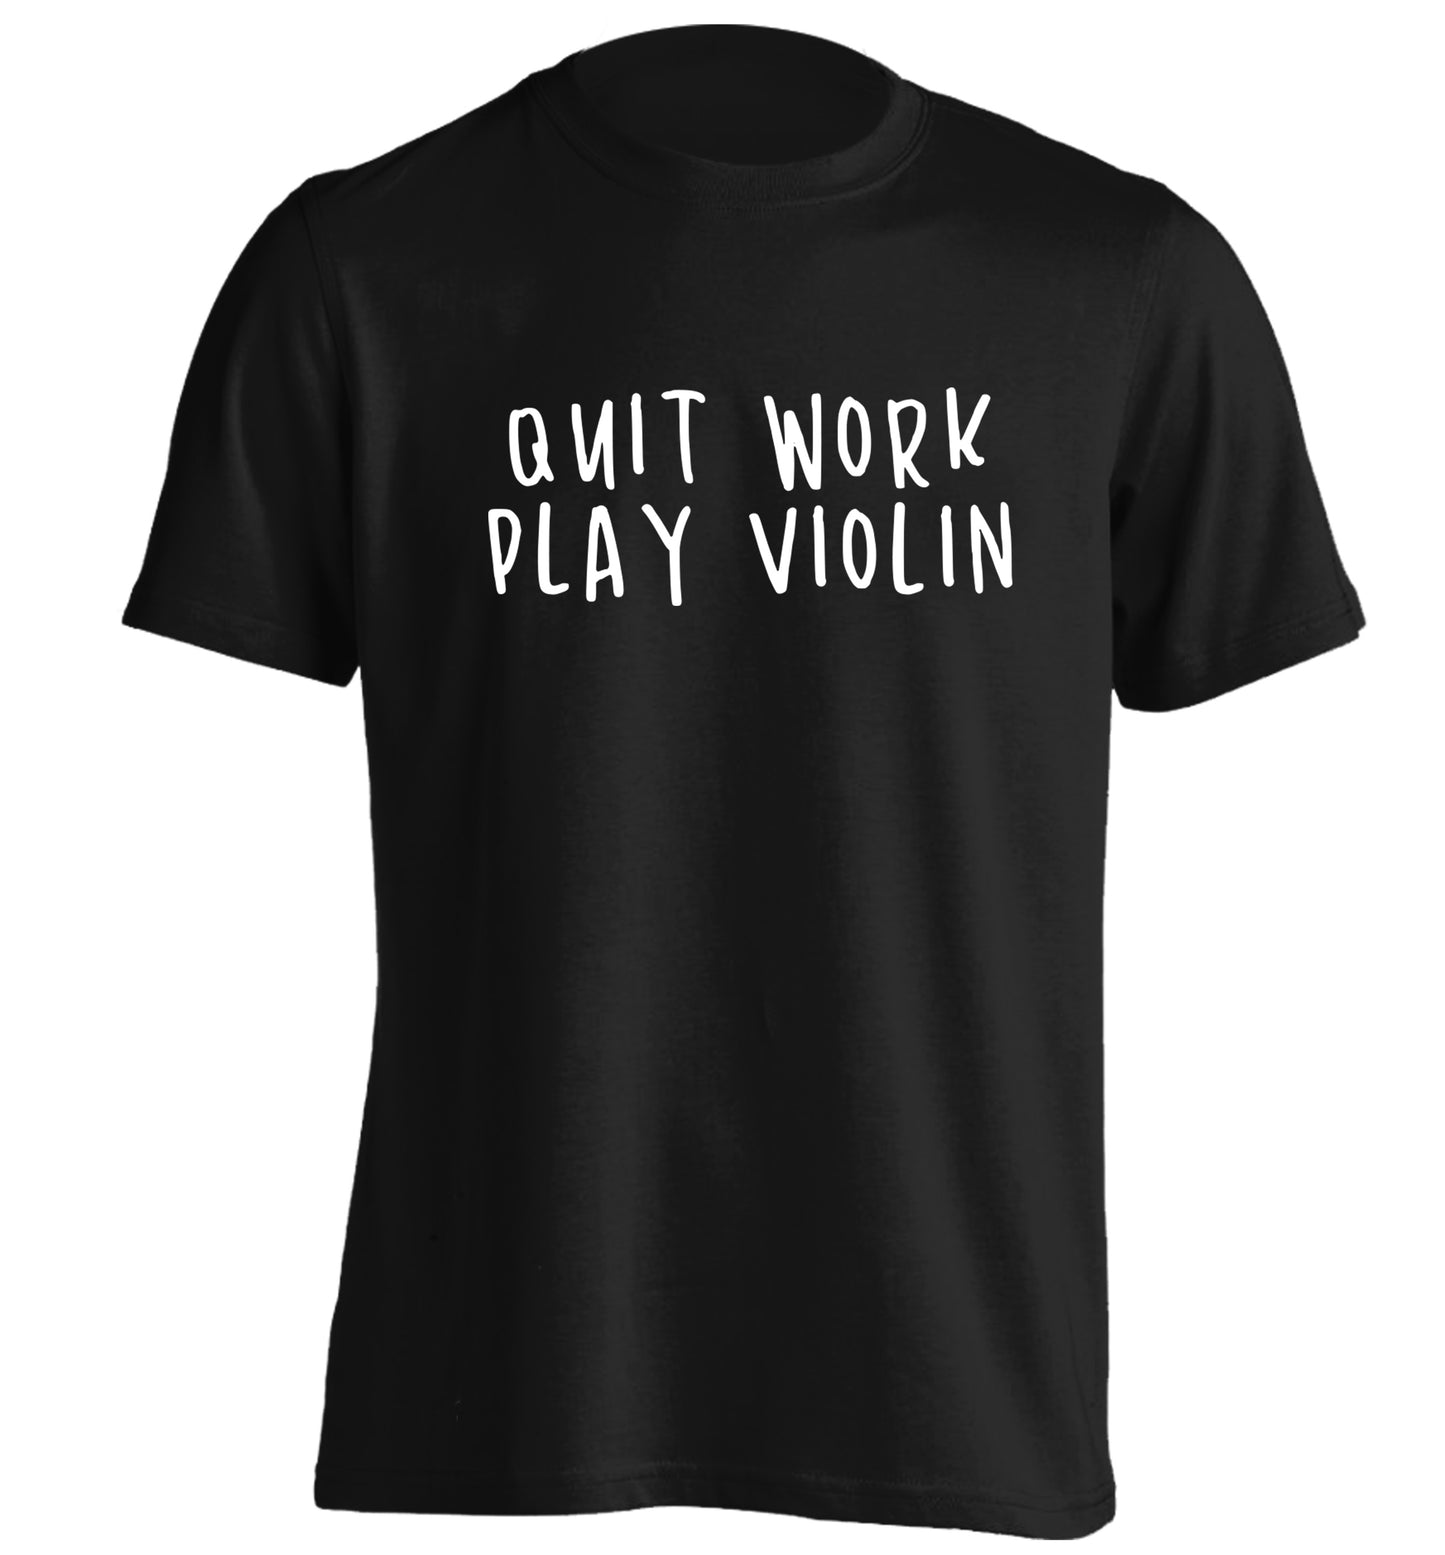 Quit work play violin adults unisex black Tshirt 2XL